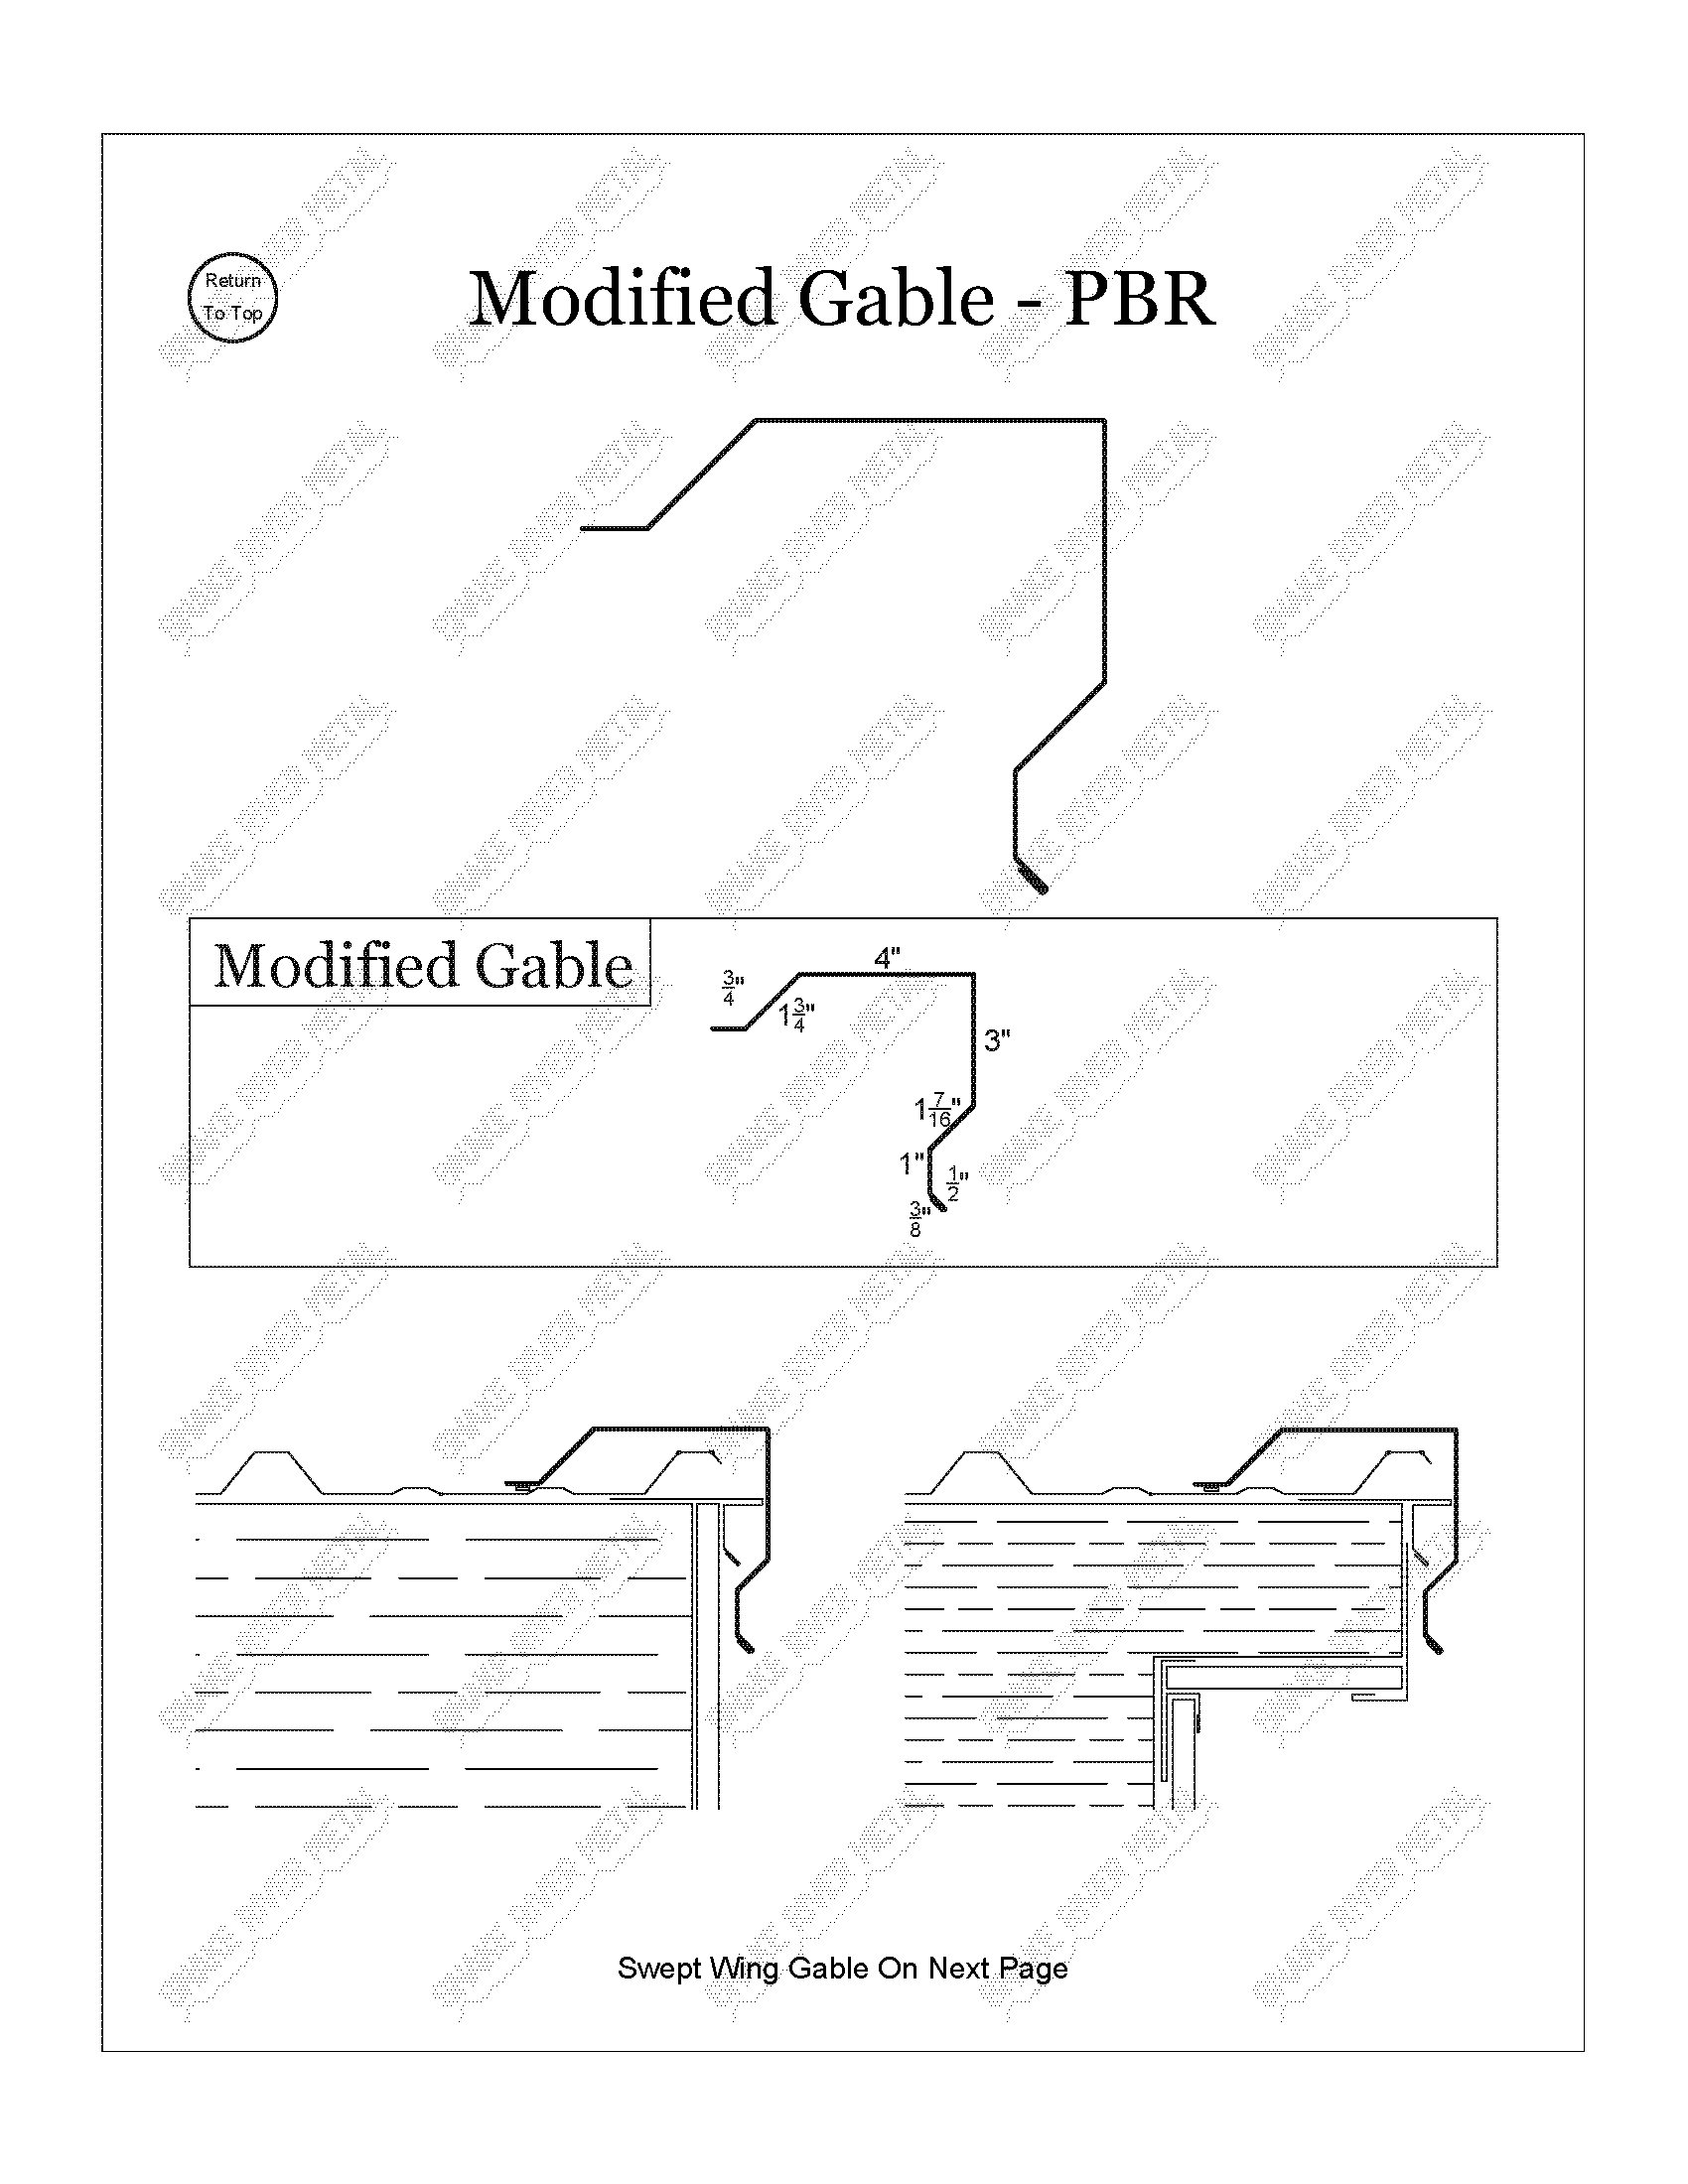 Modified Gable - PBR Trim